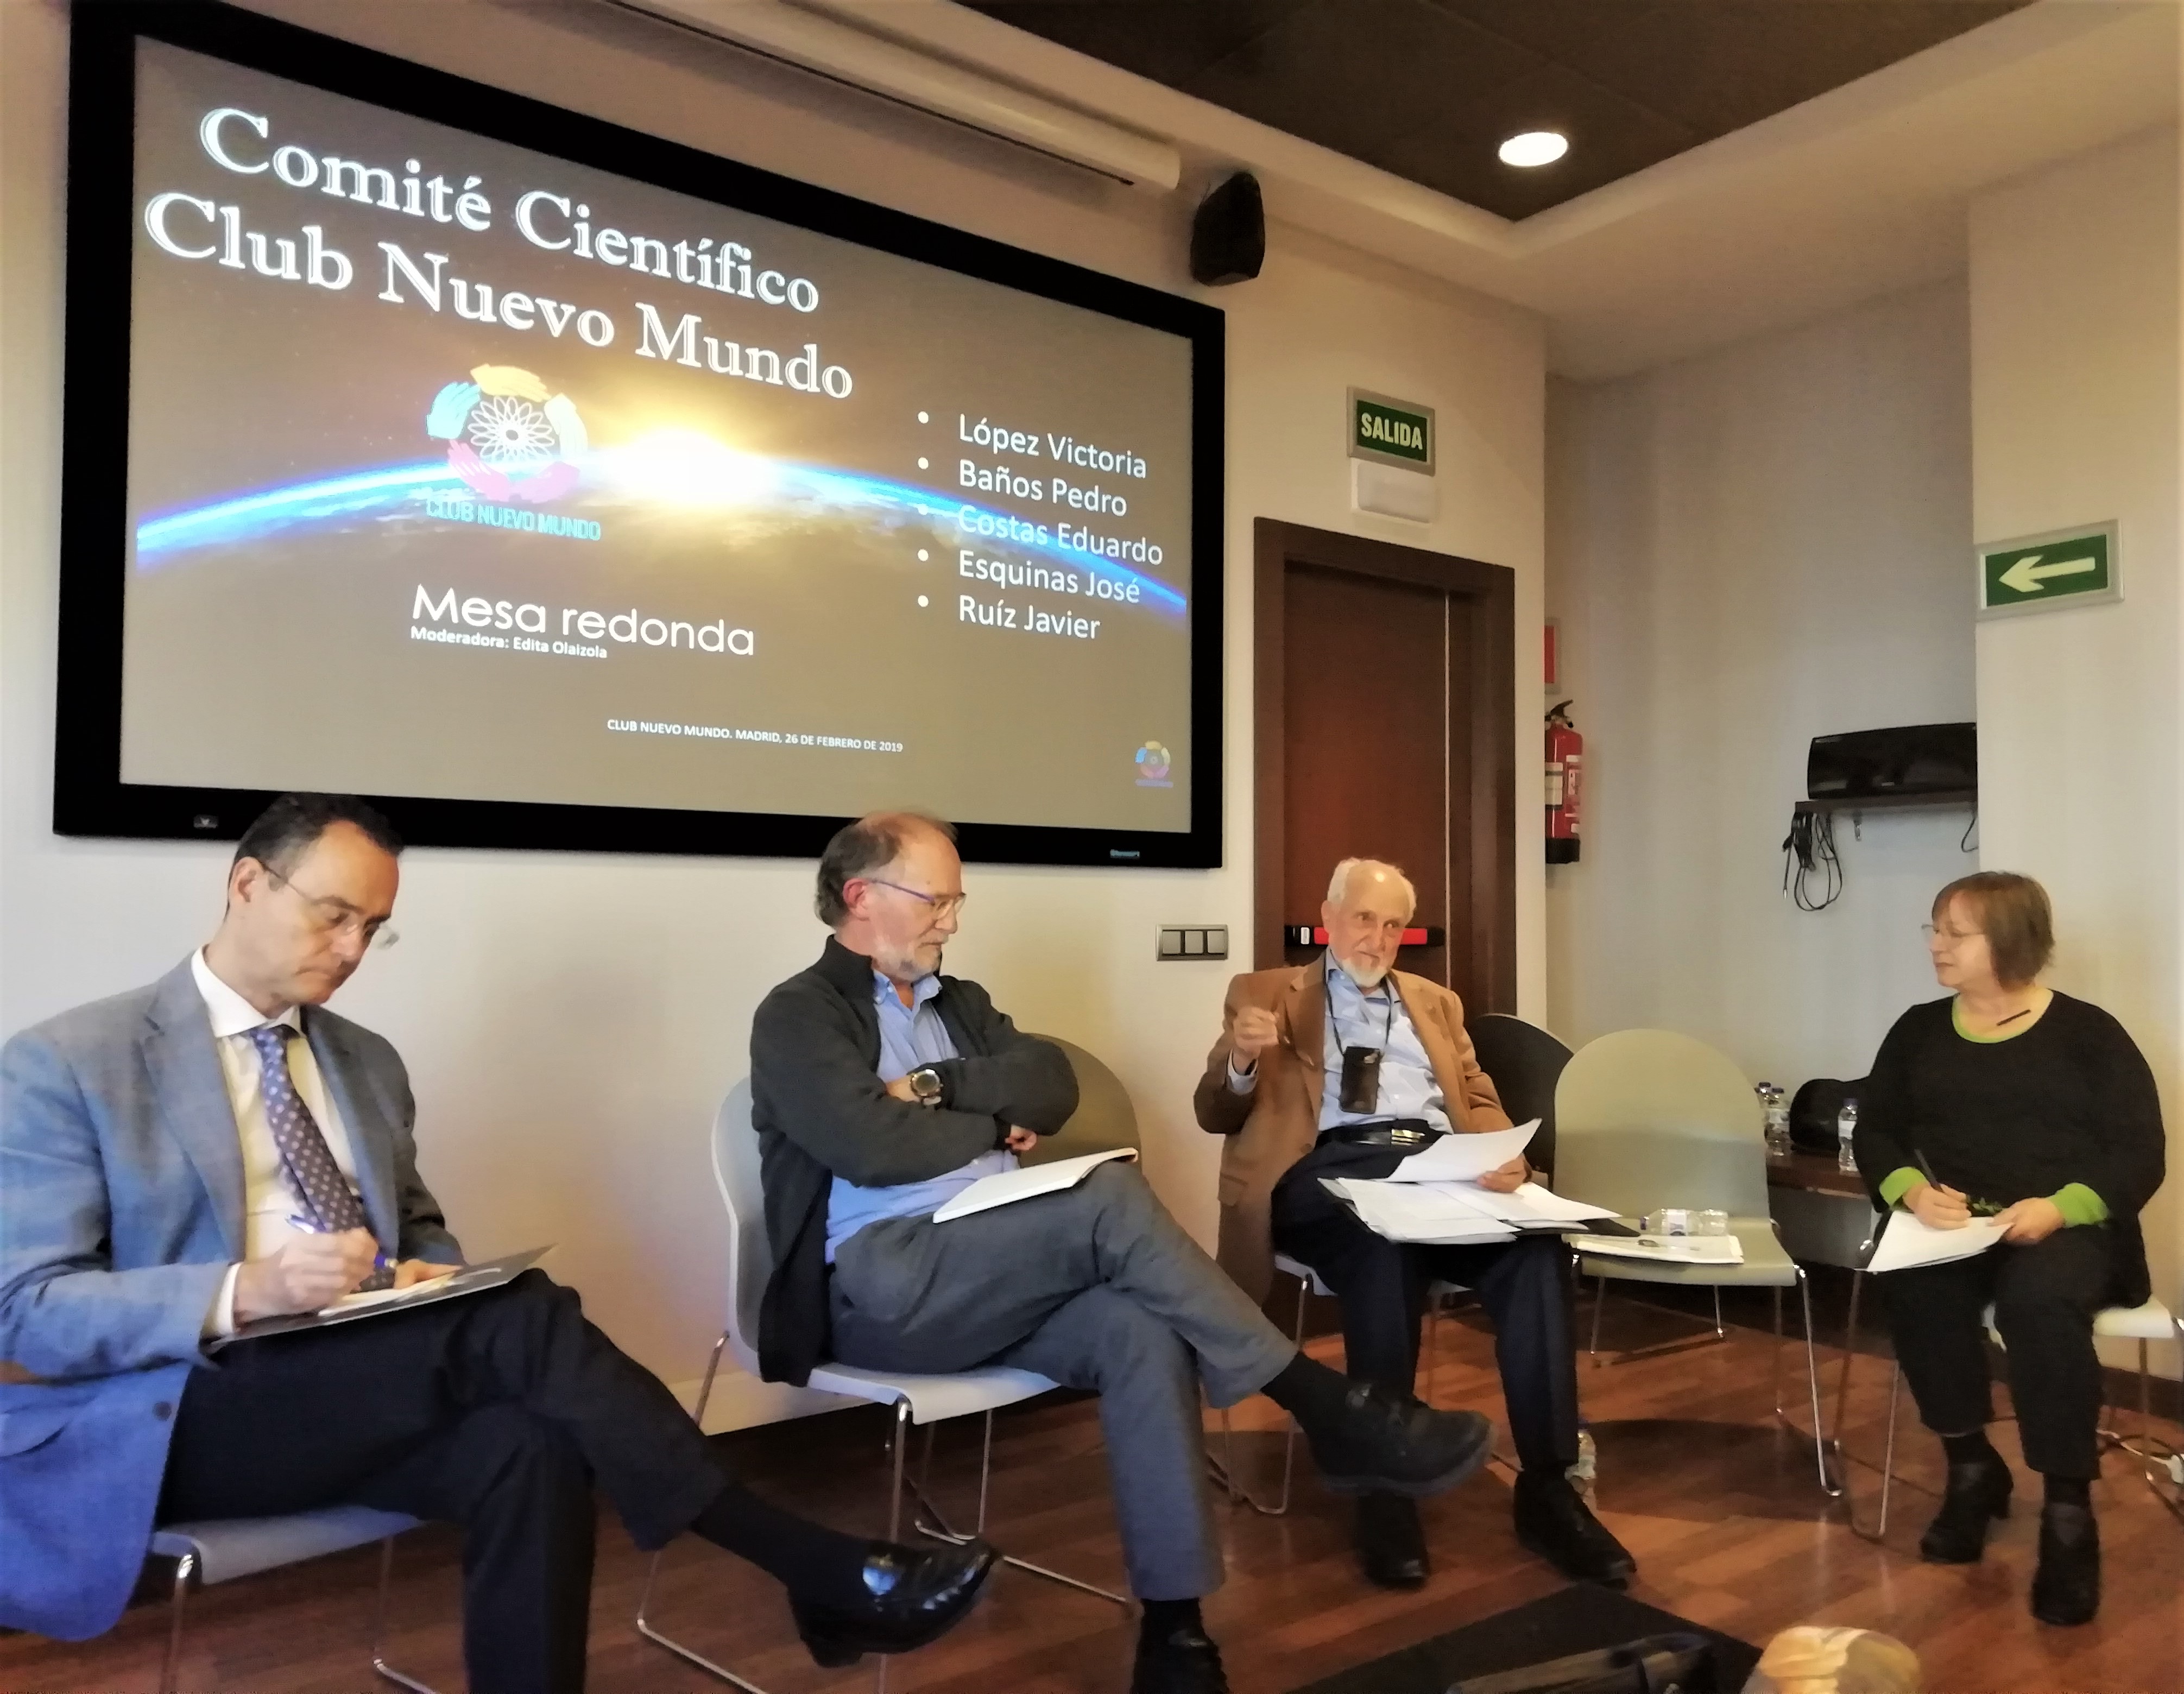 Momento de la mesa redonda. De izquierda a derecha: Pedro Baños, Eduardo Costas, José Esquinas y Edita Olaizola (moderadora). Foto: Eva Reneses.